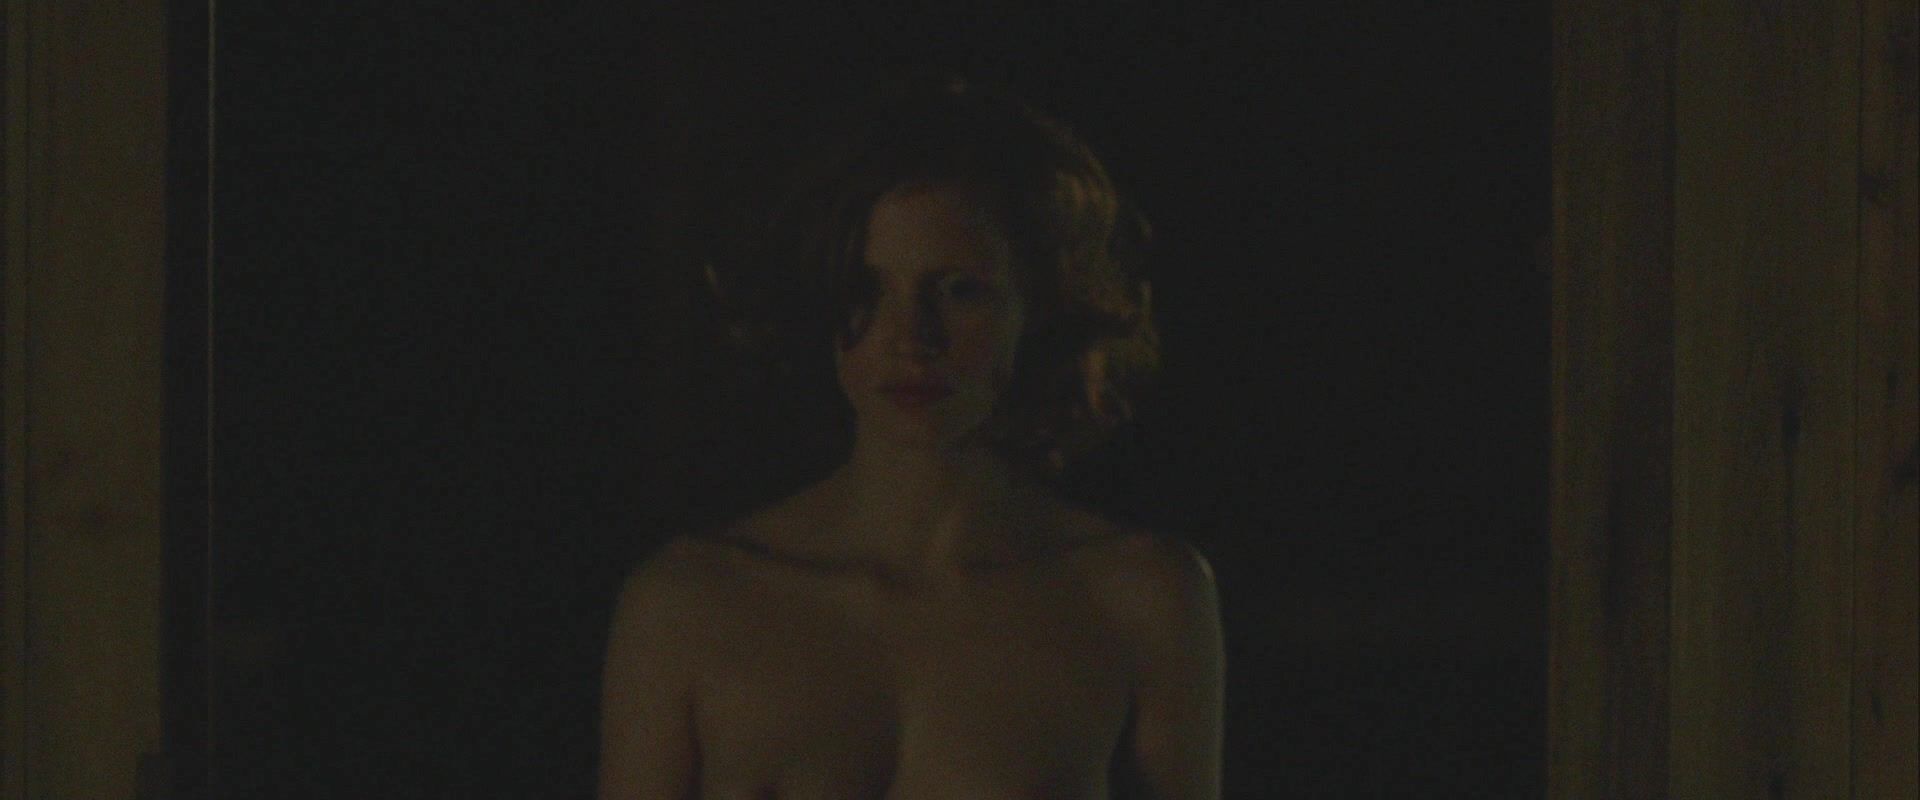 Hot Naked Girl Jessica Chastain, Mia Wasikowska - Lawless (2012) 2afg